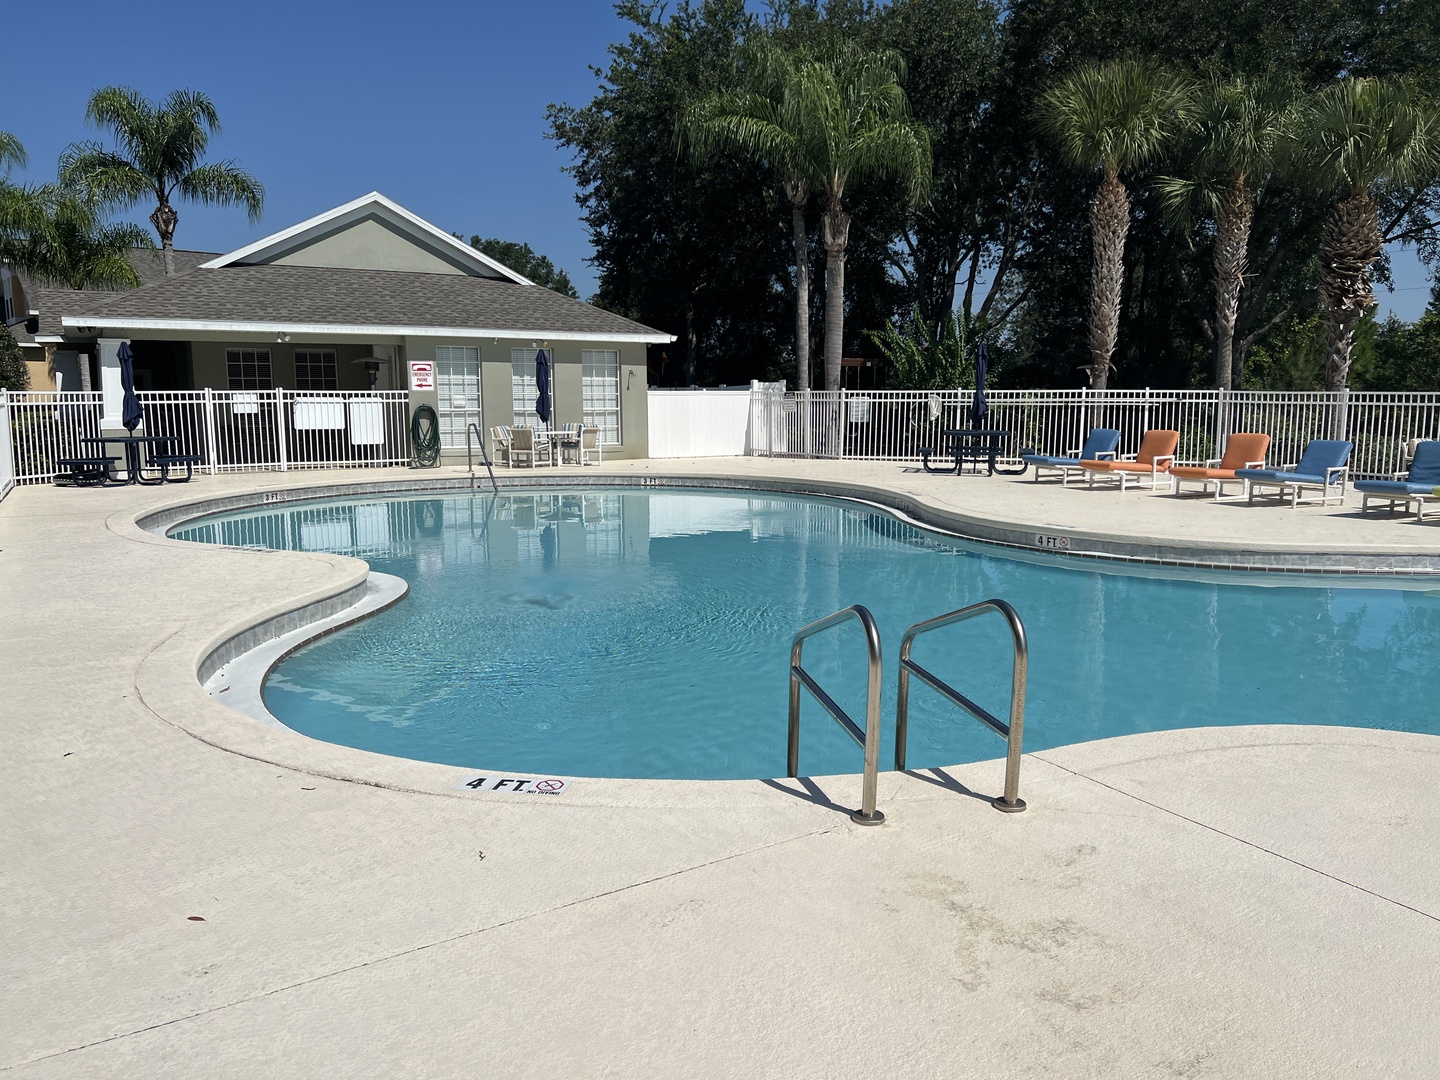 Community outdoor pool